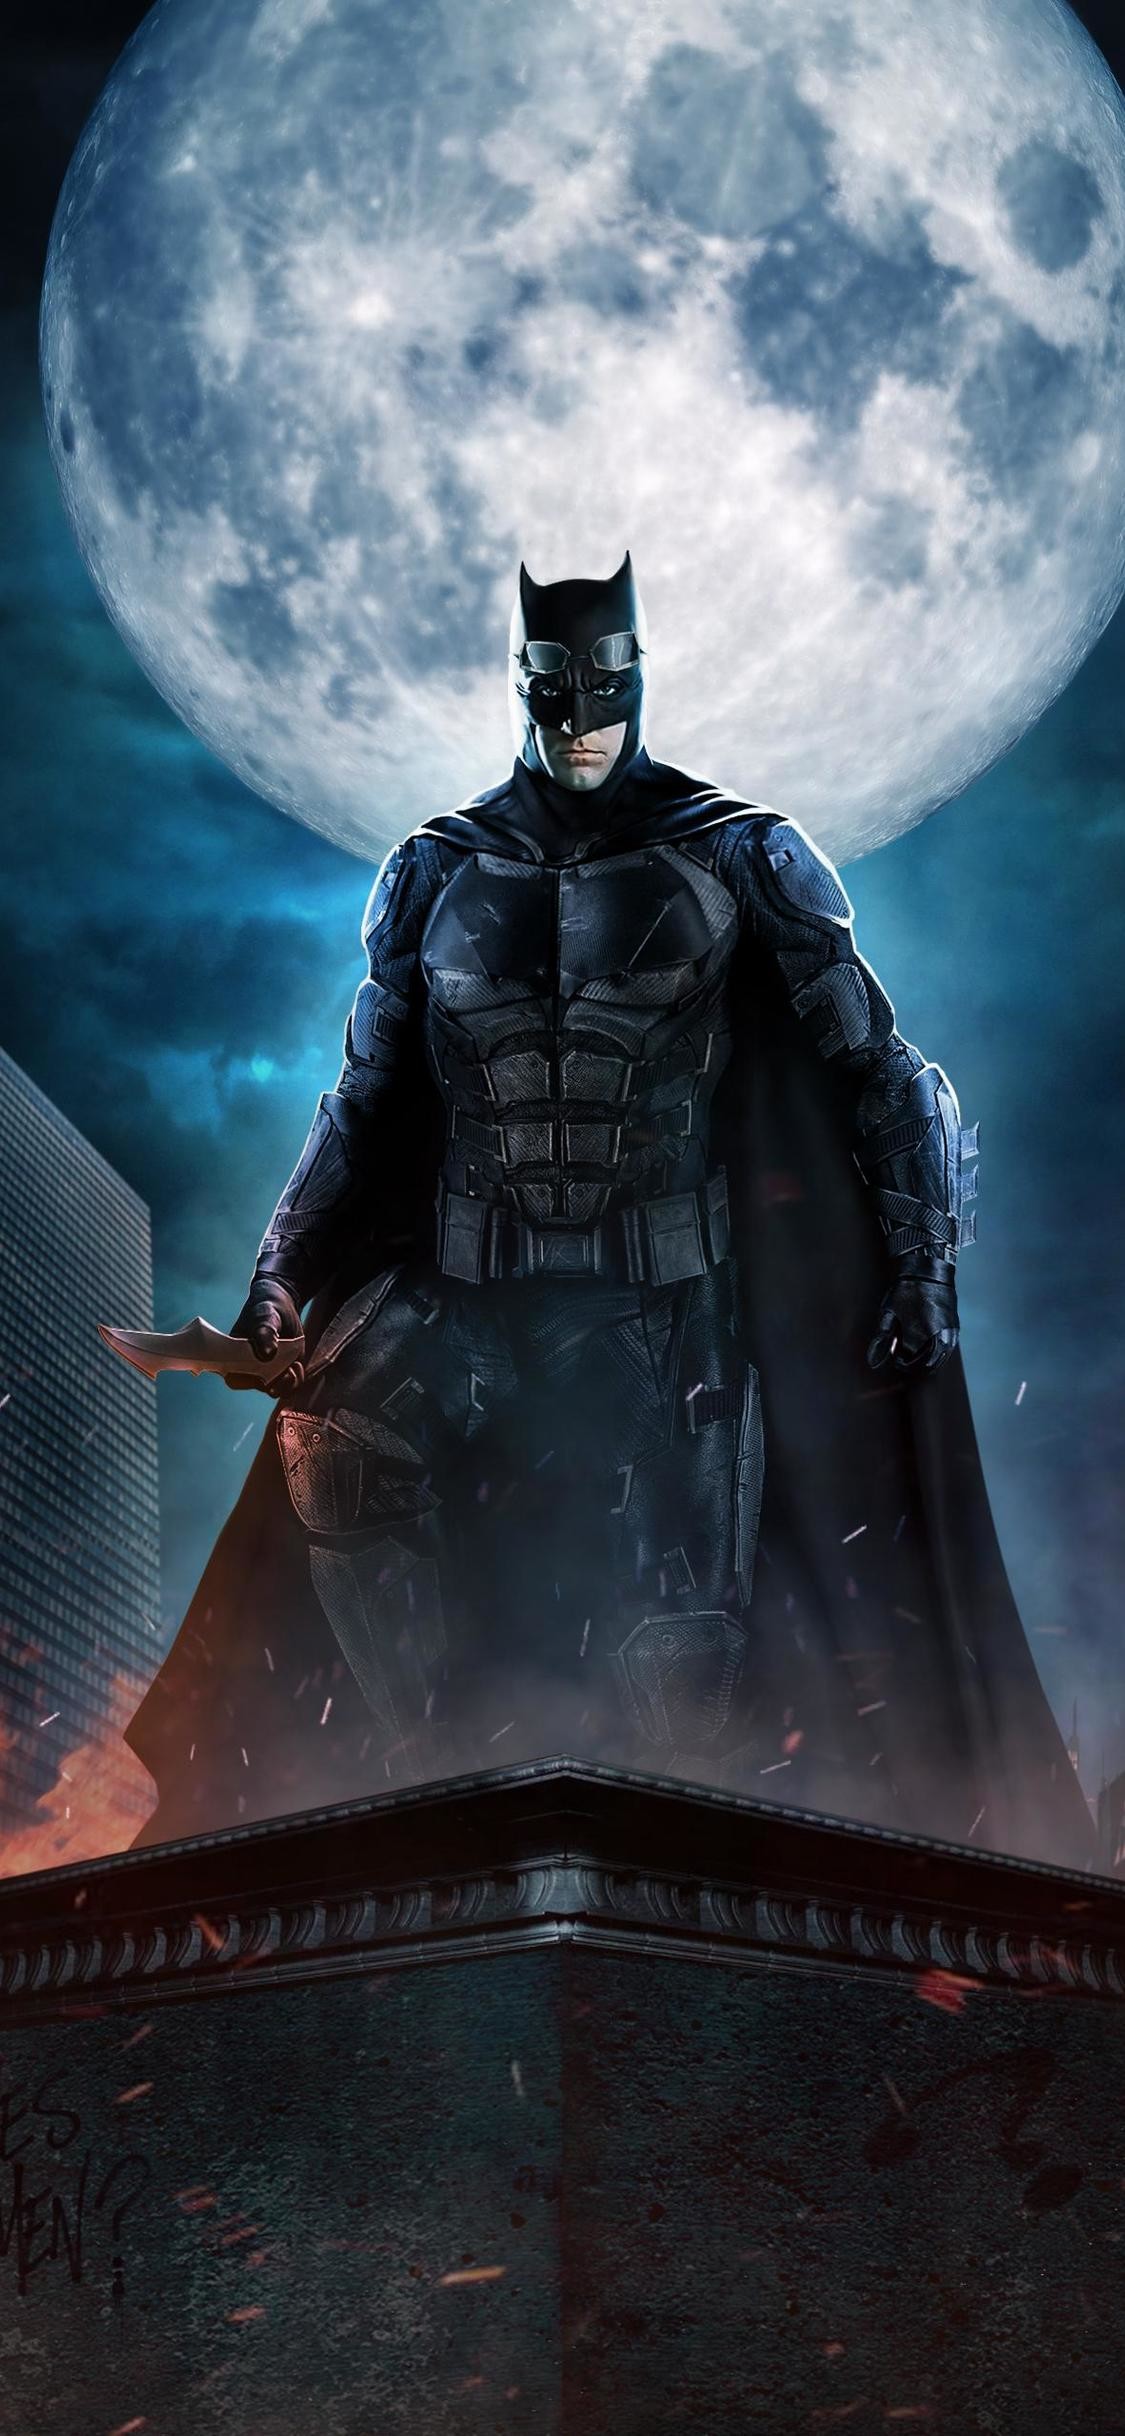 justice league wallpaper,batman,fictional character,superhero,justice league,cg artwork